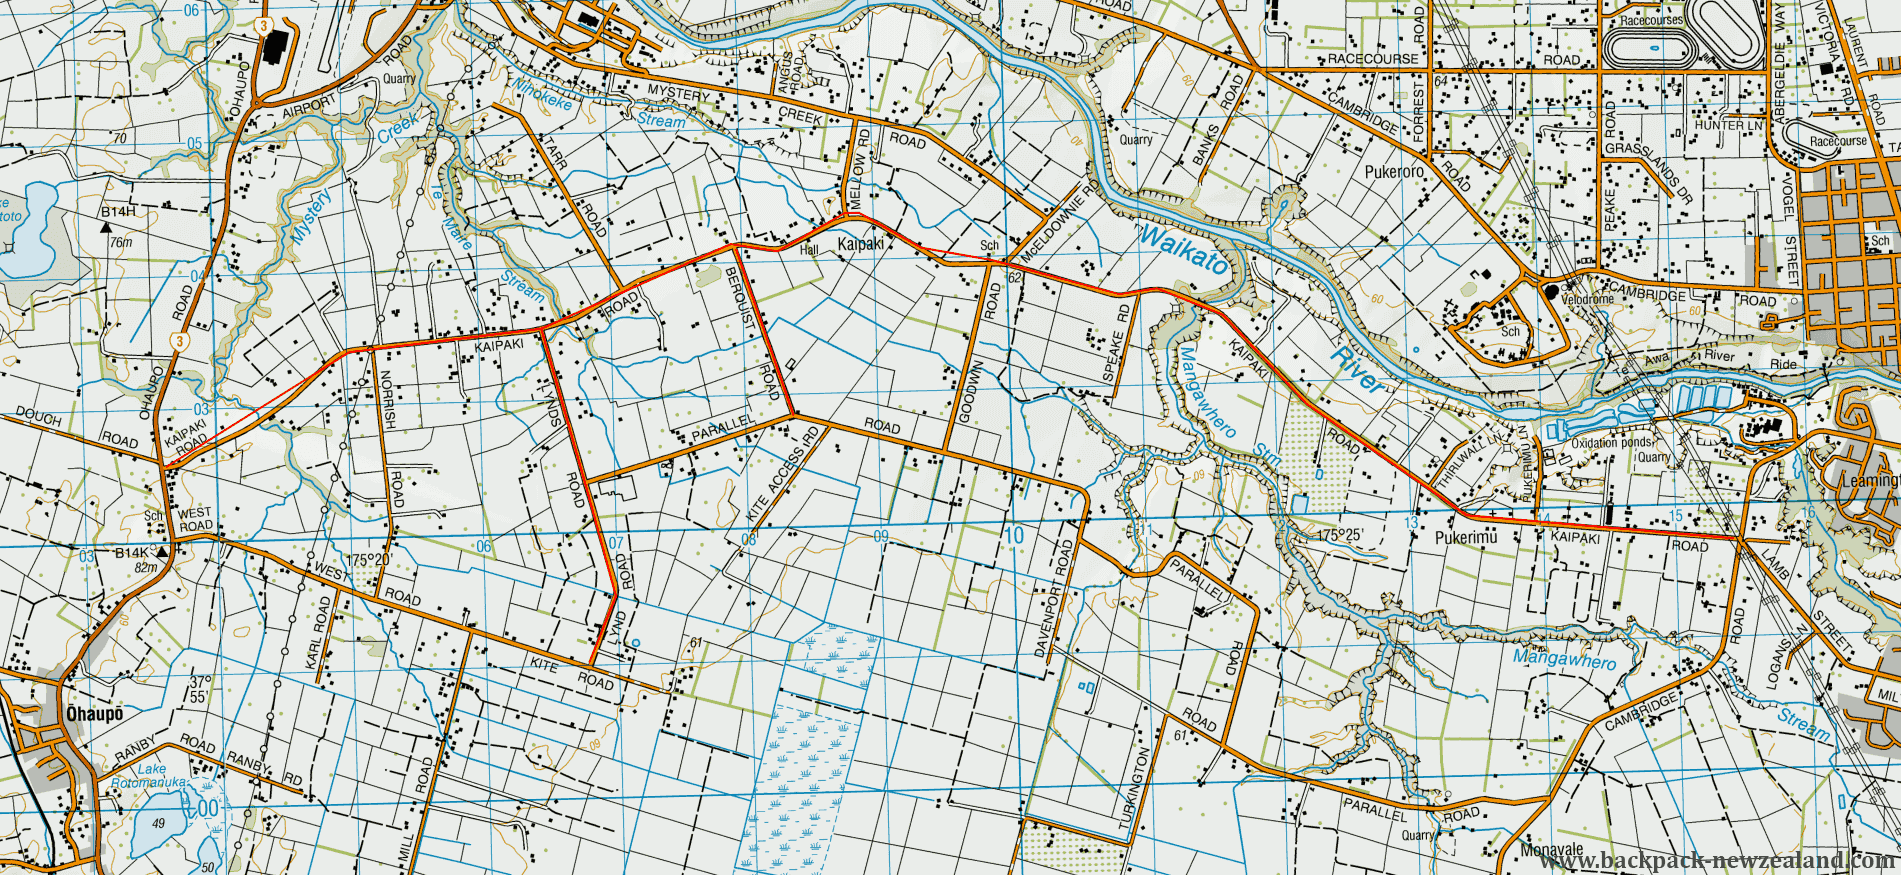 WA04 Map - New Zealand Tracks